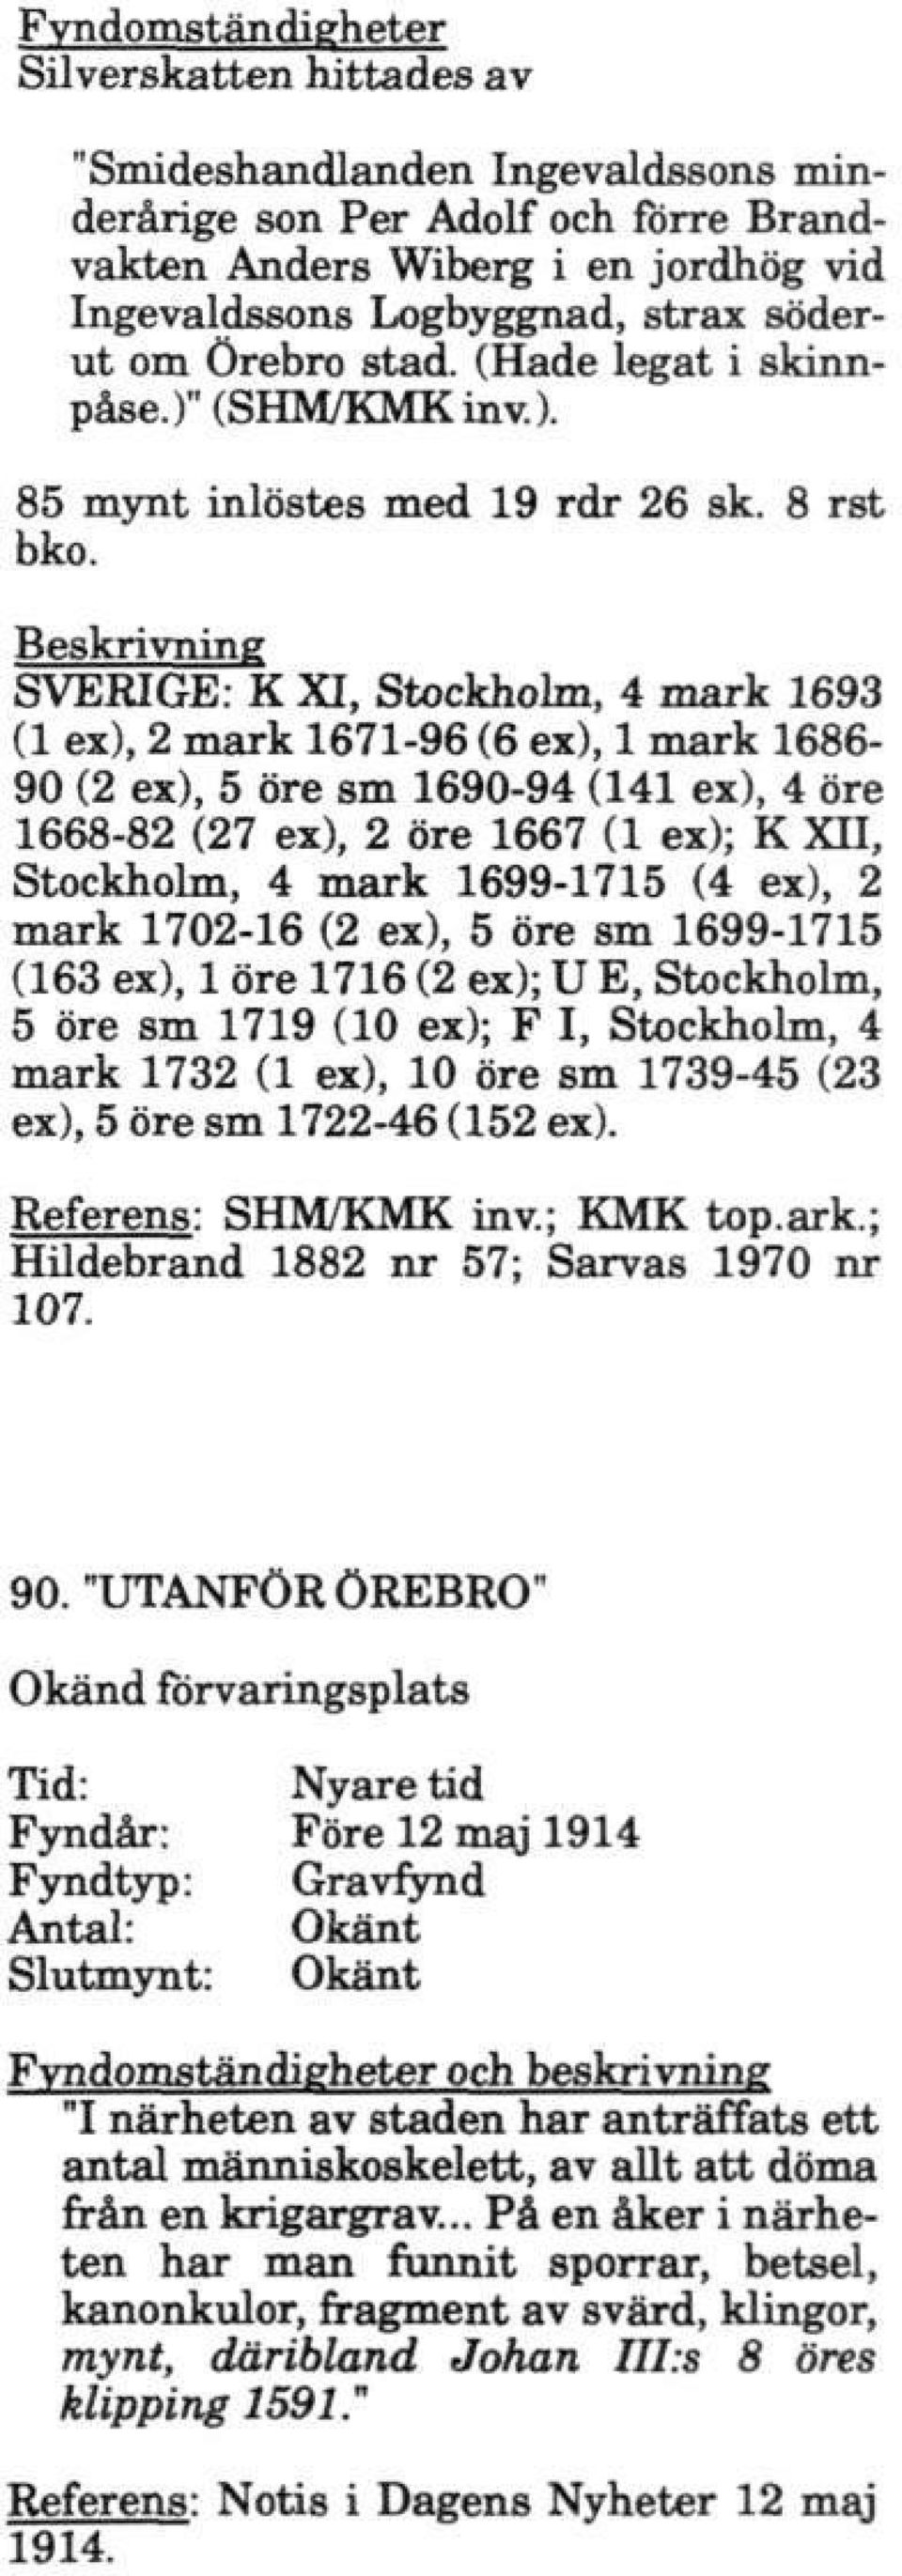 SVERIGE: K XI, Stockholm, 4 mark 1693 (1 ex), 2 mark 1671-96 (6 ex), 1 mark 1686-90 (2 ex), 5 öre sm 1690-94 (141 ex), 4 öre 1668-82 (27 ex), 2 öre 1667 (1 ex); K XII, Stockholm, 4 mark 1699-1715 (4